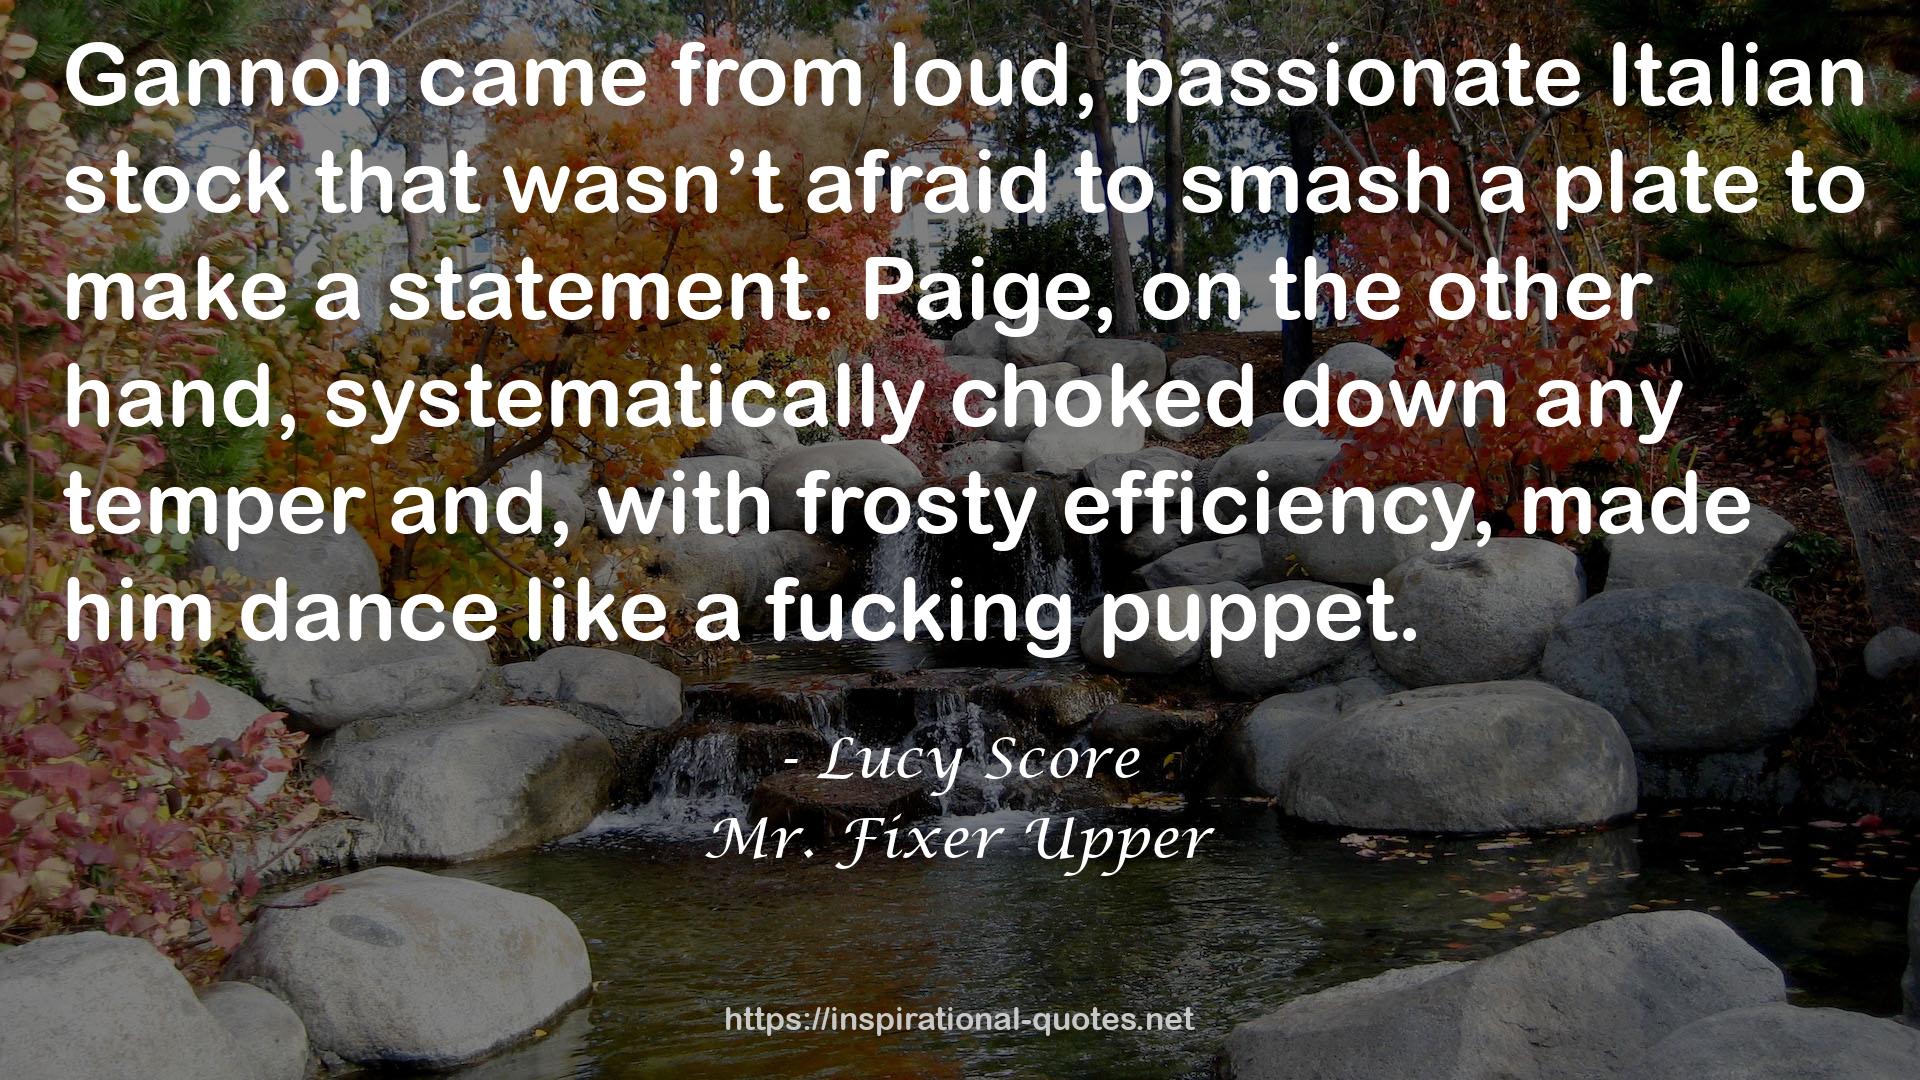 Mr. Fixer Upper QUOTES